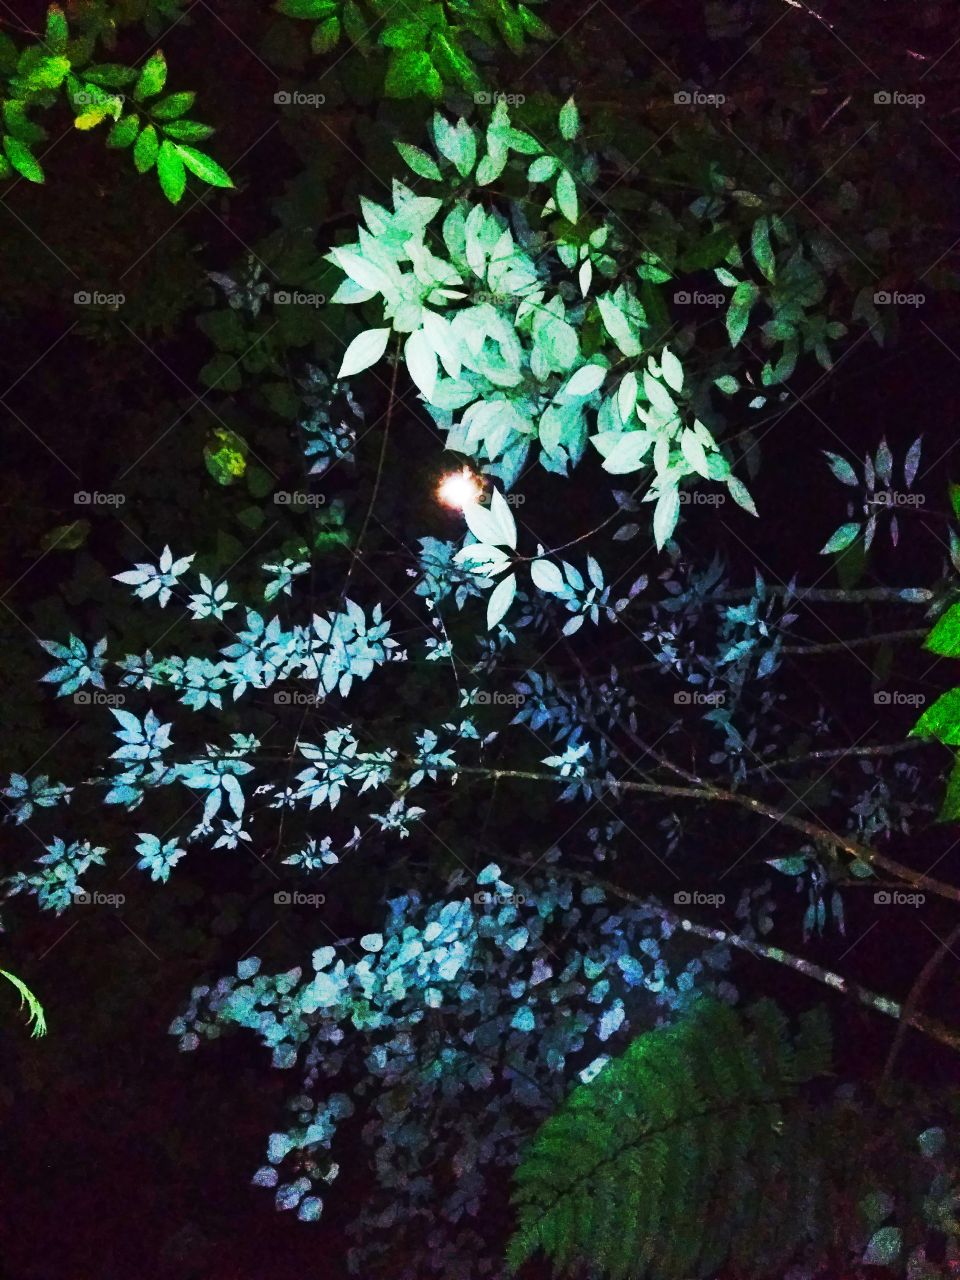 Leaves in the dark of night